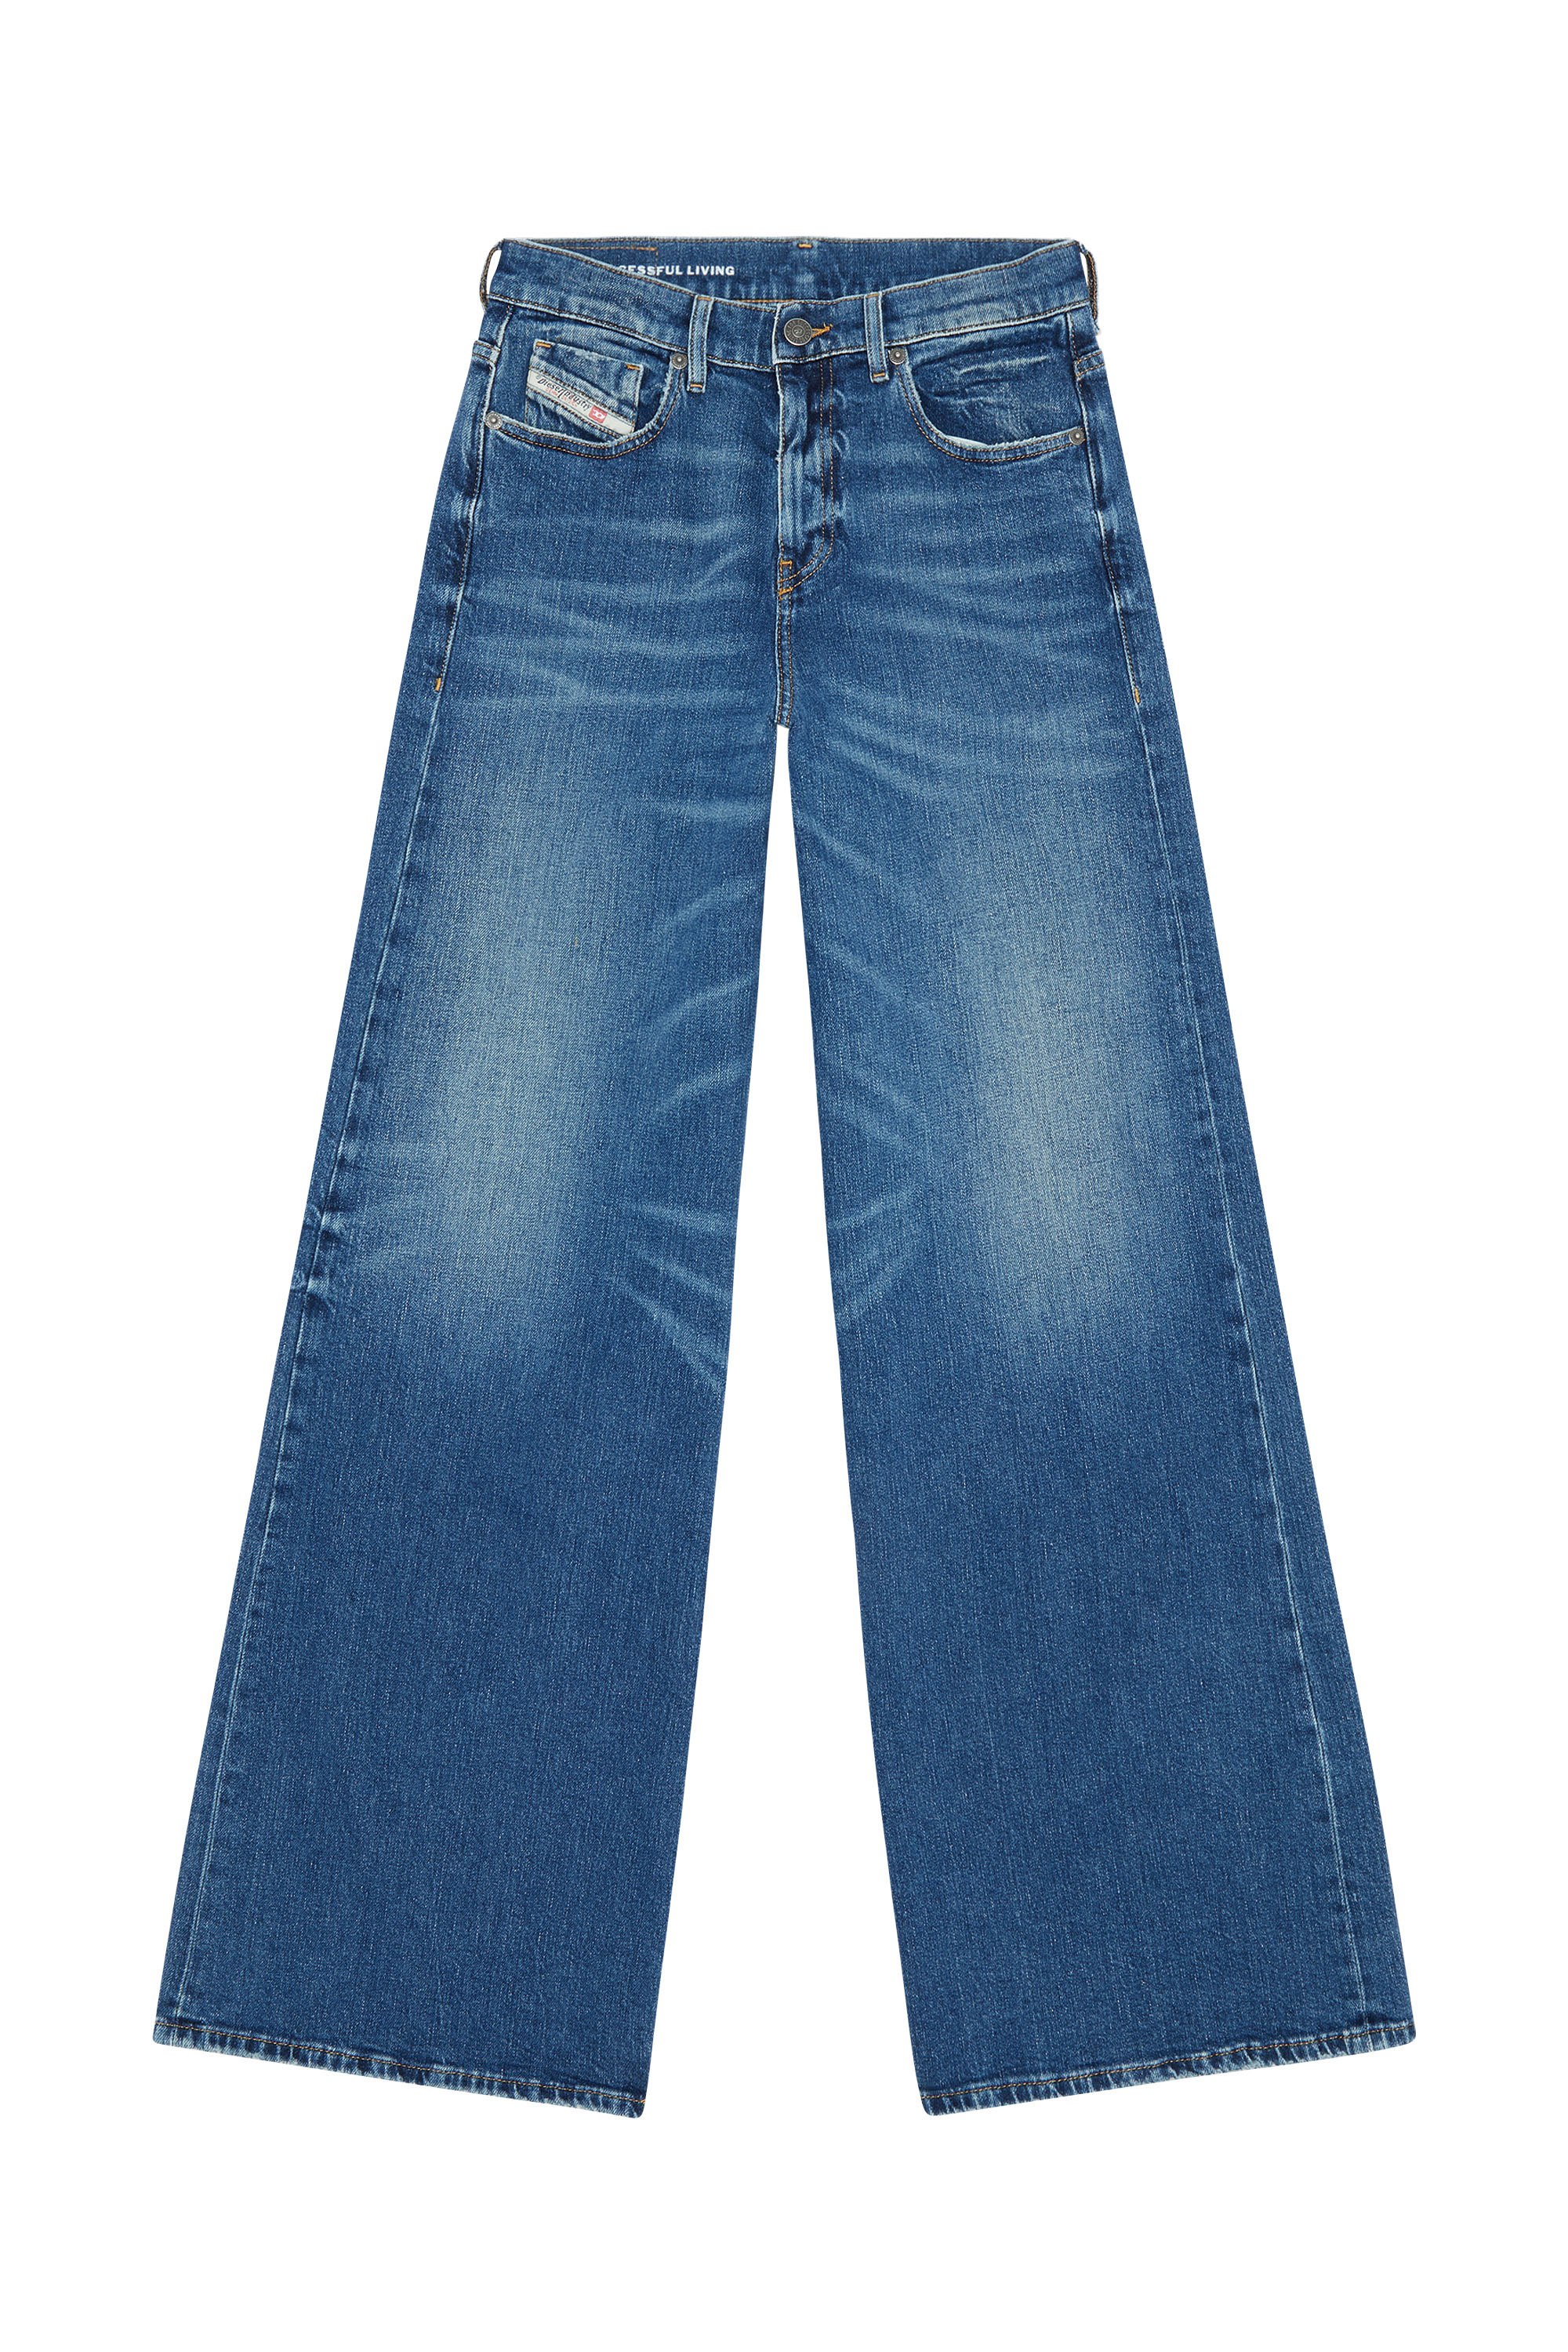 1978 007L1 Bootcut and Flare Jeans, Bleu moyen - Jeans